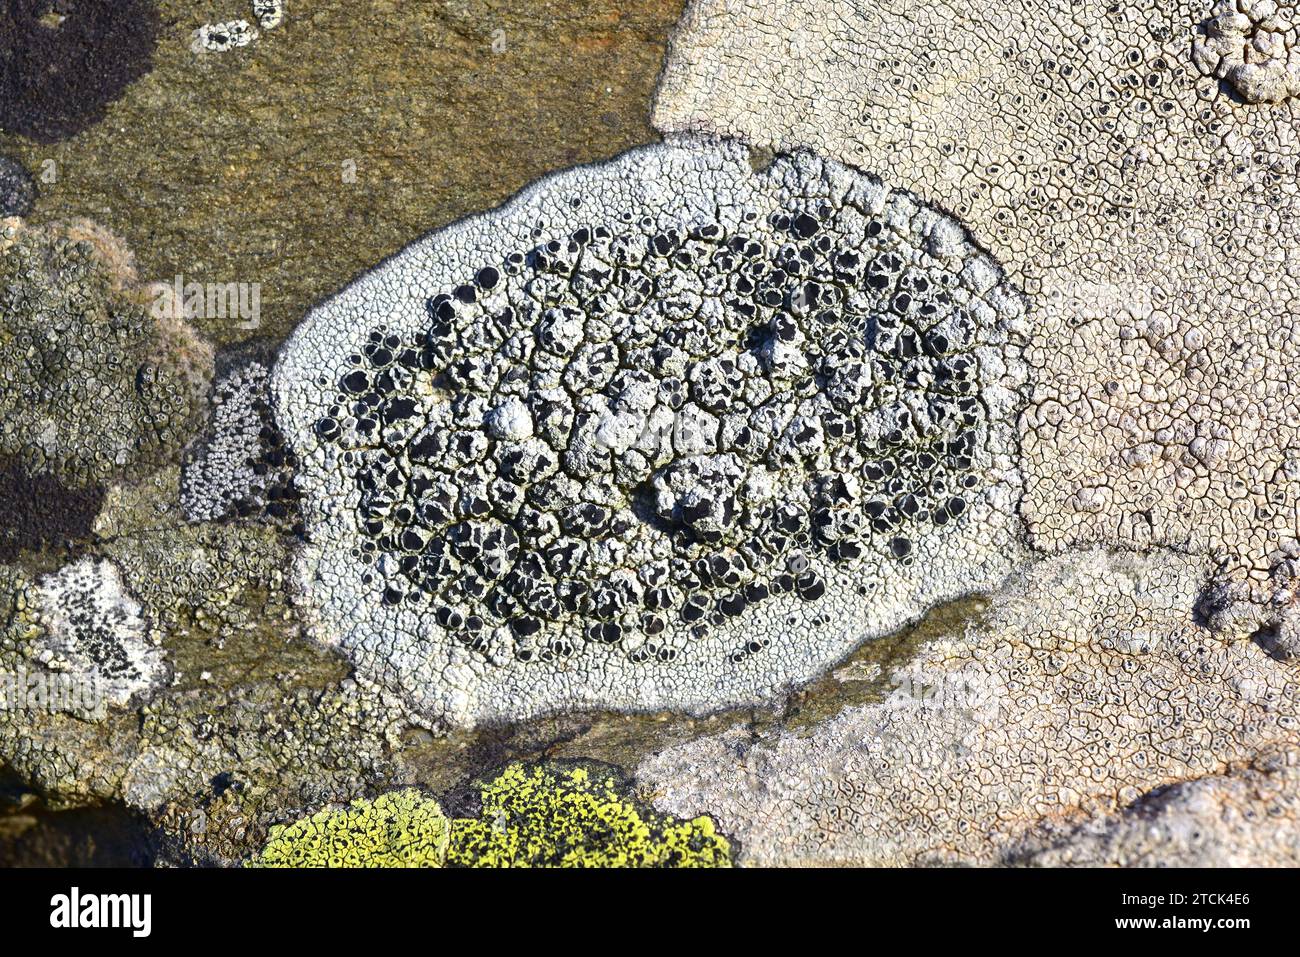 Tephromela atra or Lecanora atra is a crustose lichen with black apothecia. This photo was taken in La Albera, Girona province, Catalonia, Spain. Stock Photo